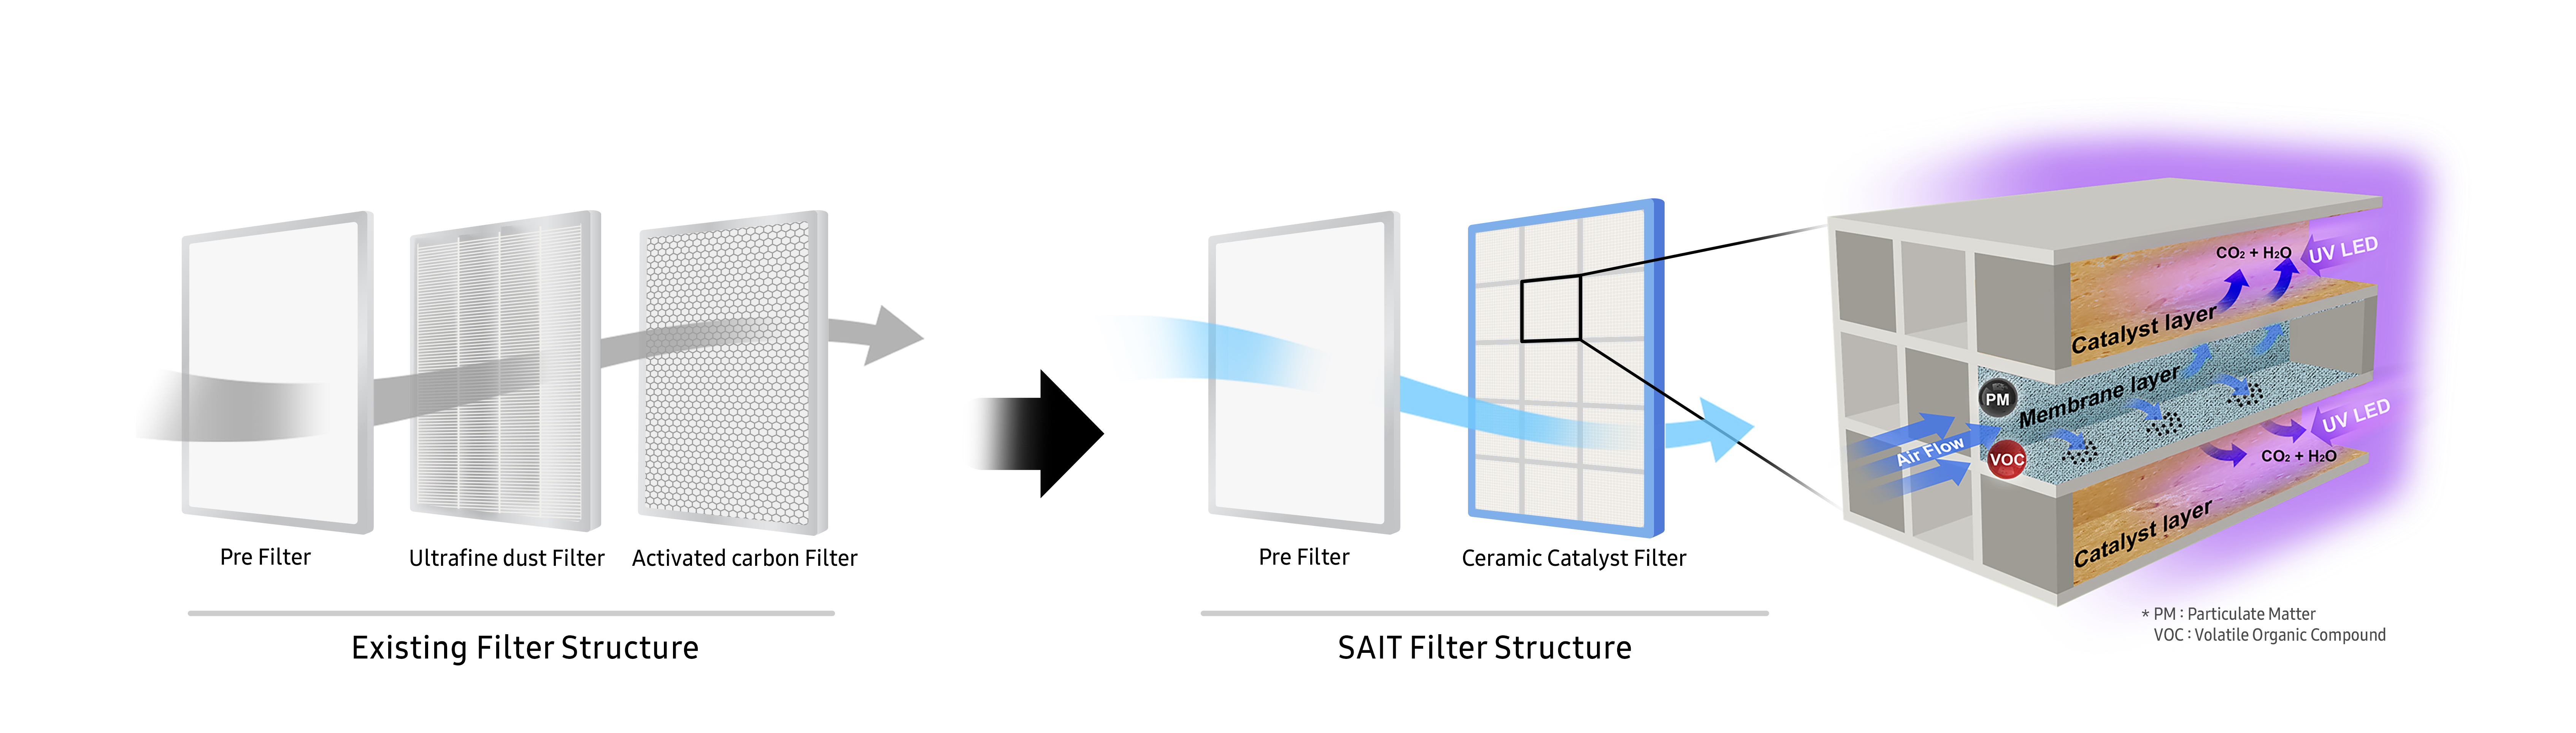 Struktura filtra (źródło: Samsung)